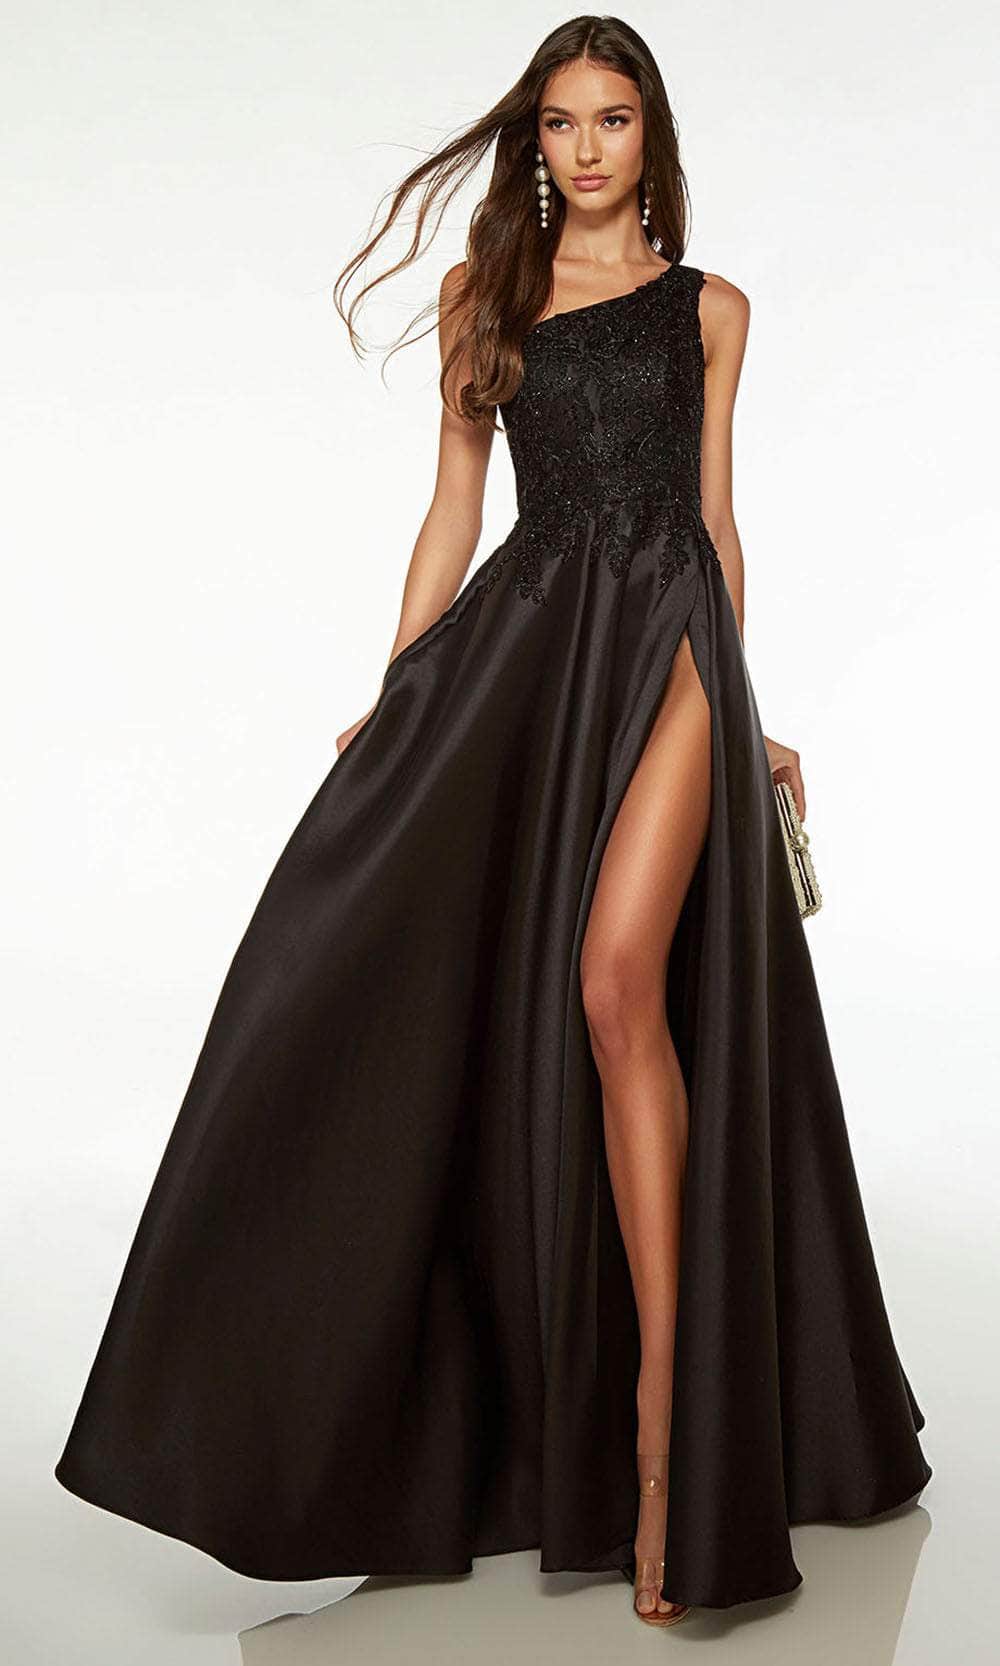 Alyce Paris 61700 - Embroidered One-Shoulder Dress Special Occasion Dress 000 / Black